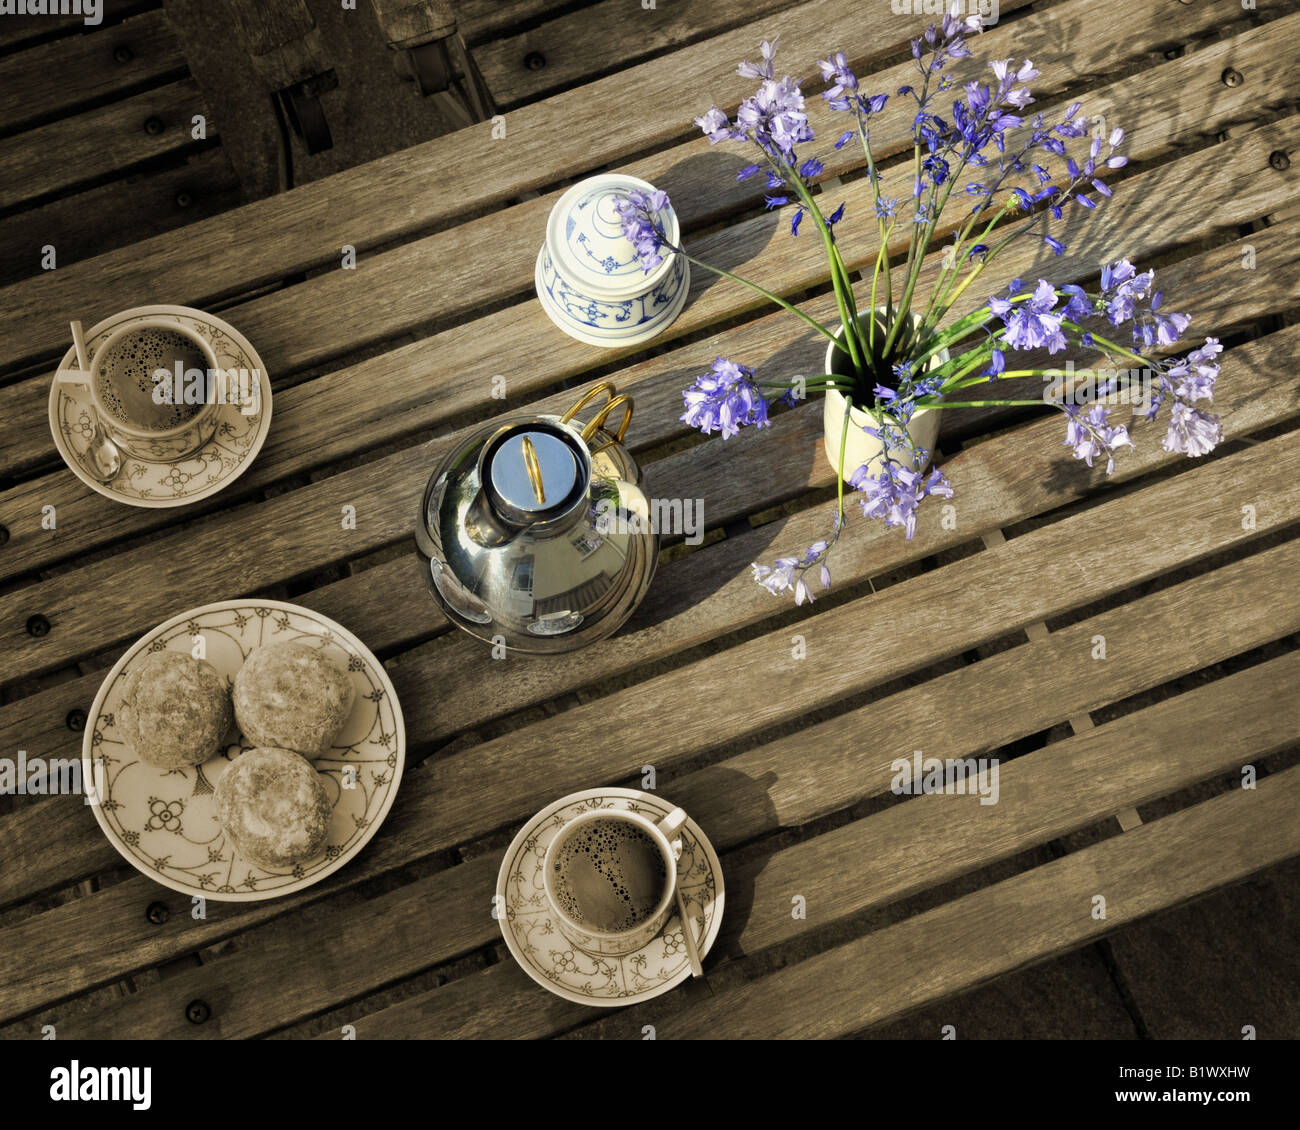 Estilo de vida: mesa de café con flores. Foto de stock